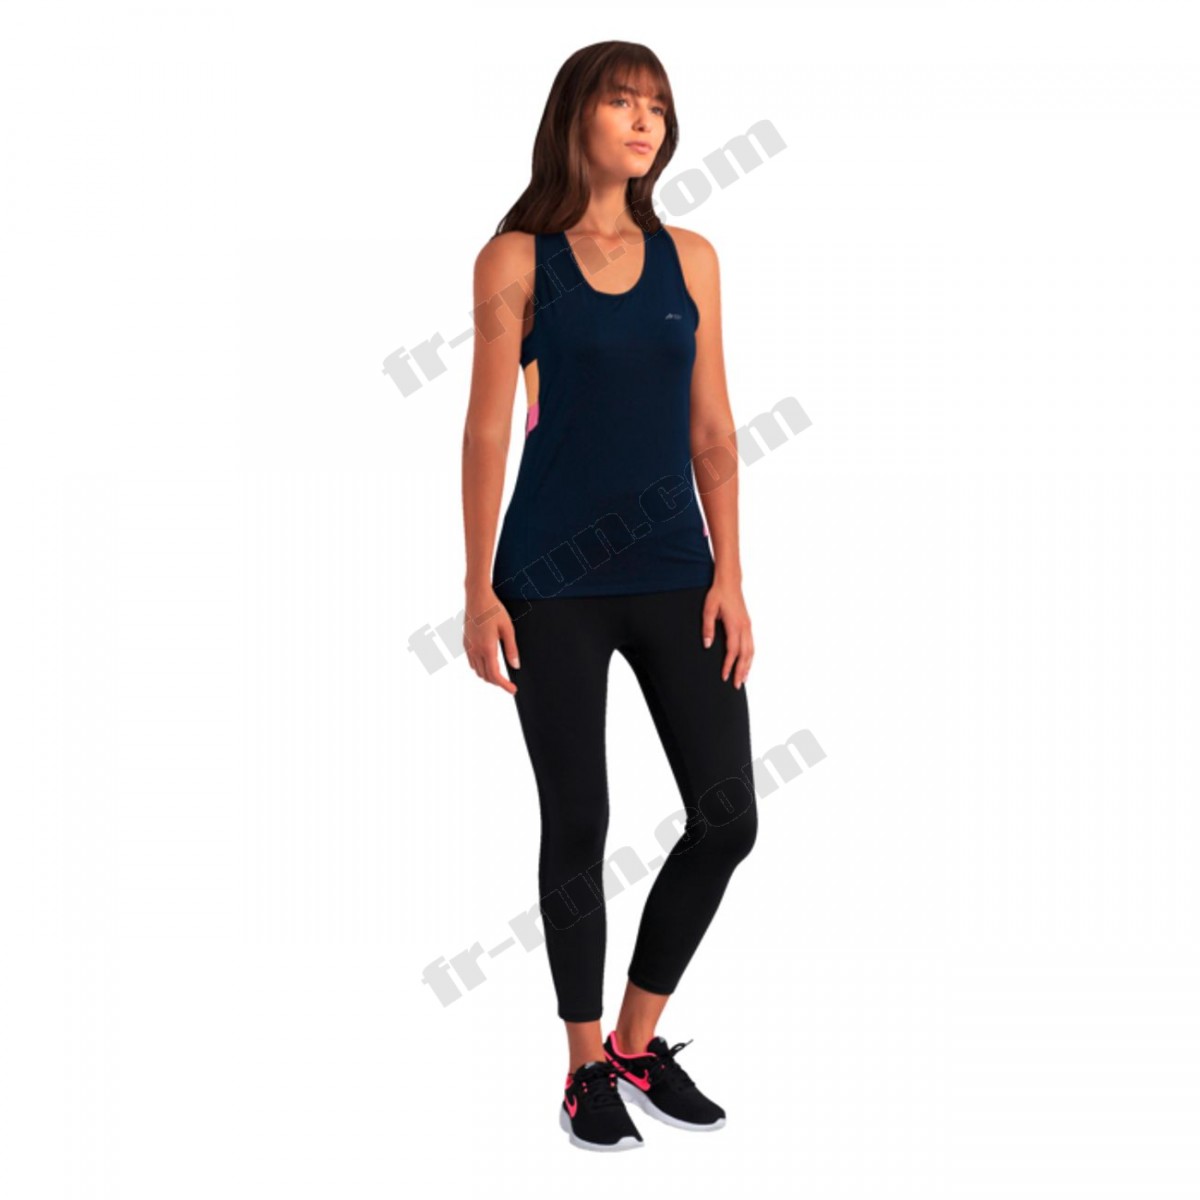 Athlitech/LEGGING Fitness femme ATHLITECH JADE 7/8 √ Nouveau style √ Soldes - -1